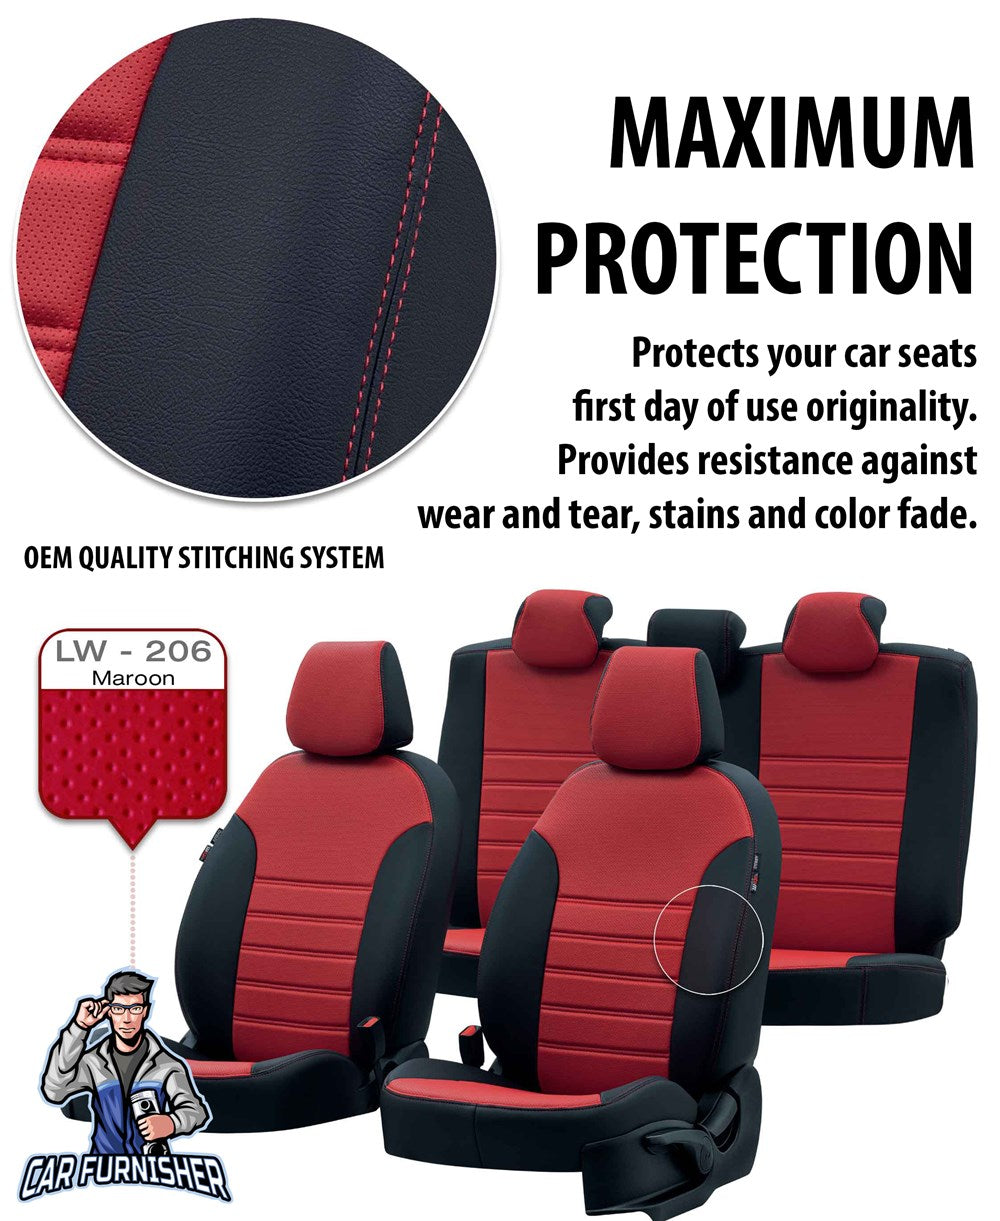 Kia Cerato Seat Covers Istanbul Leather Design Smoked Black Leather